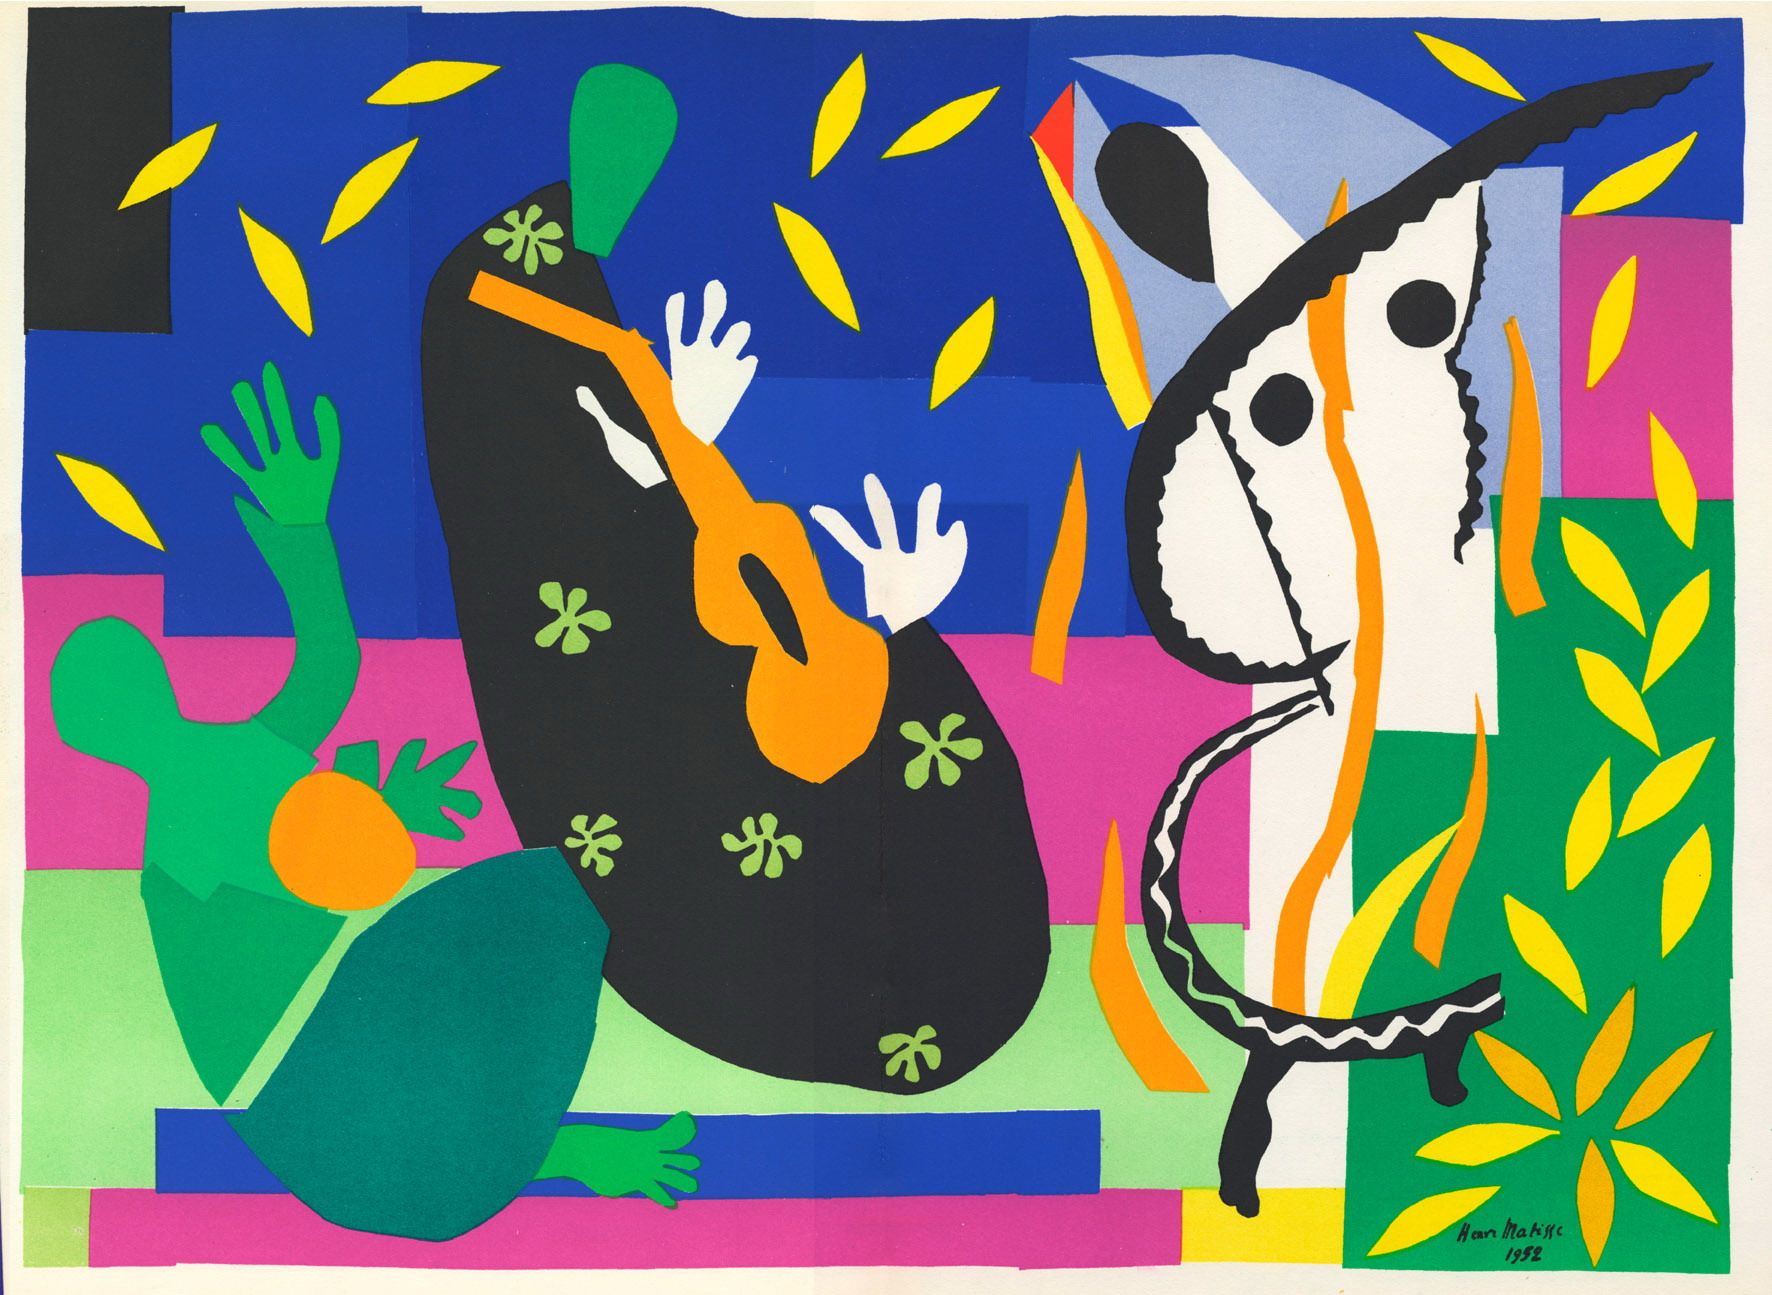 65a84a63439f0 Henri Matisse: Quem Foi O Artista, Obras E Características